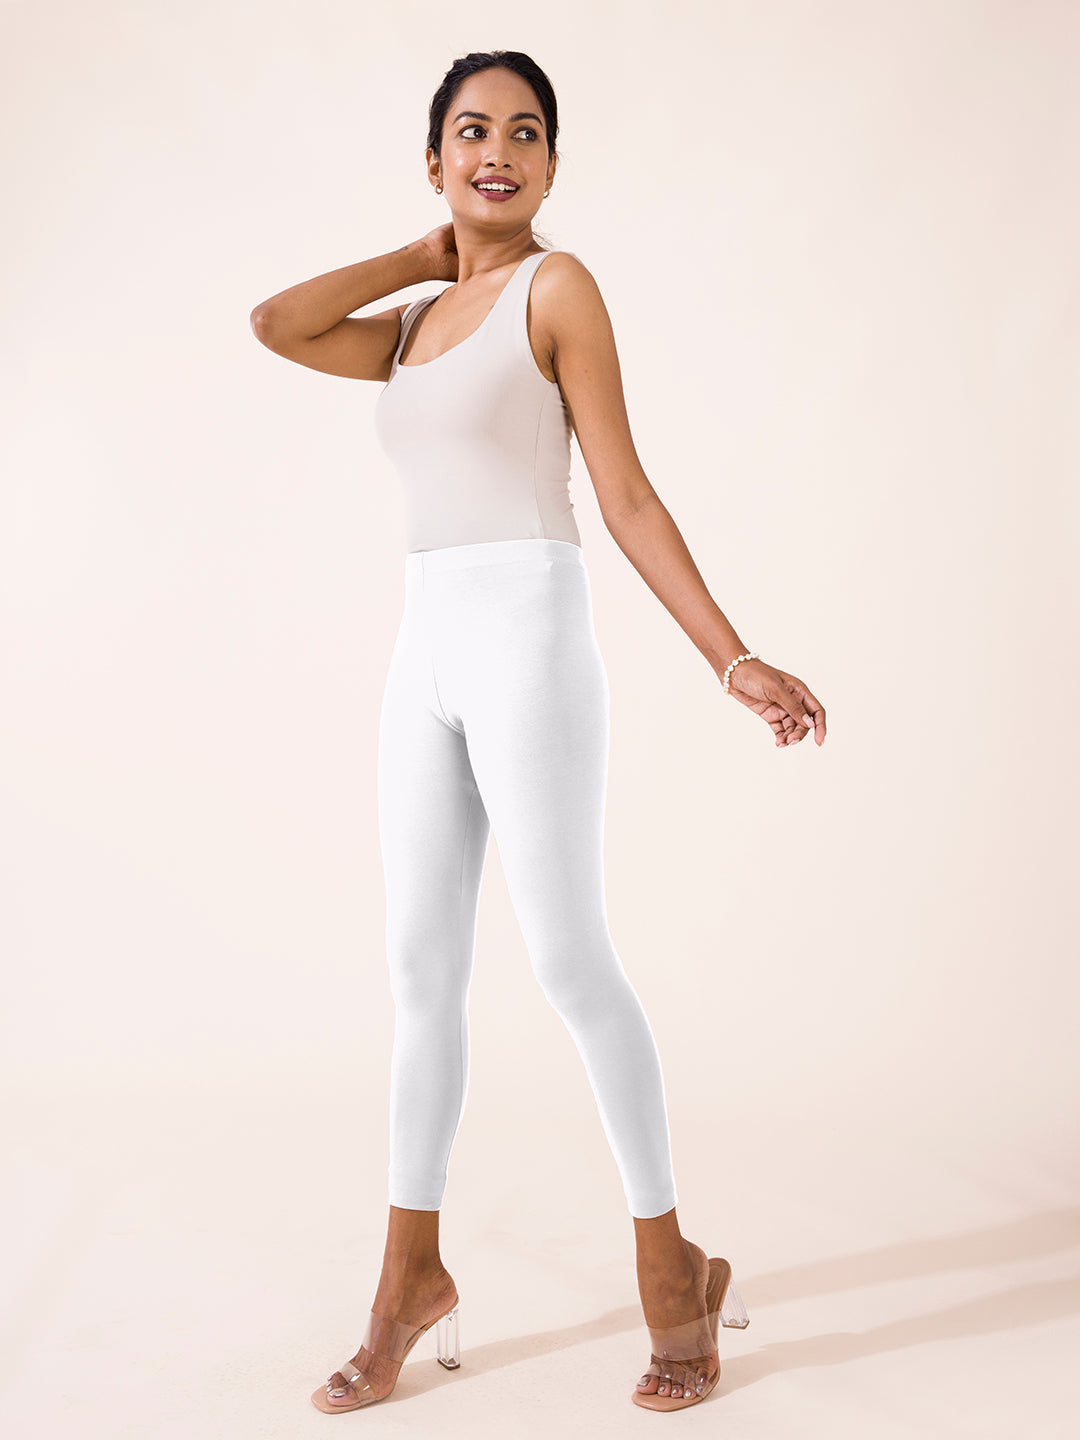 Go Colors Shimmer Leggings for Women - Light Gold (Large) : Amazon.in:  Fashion